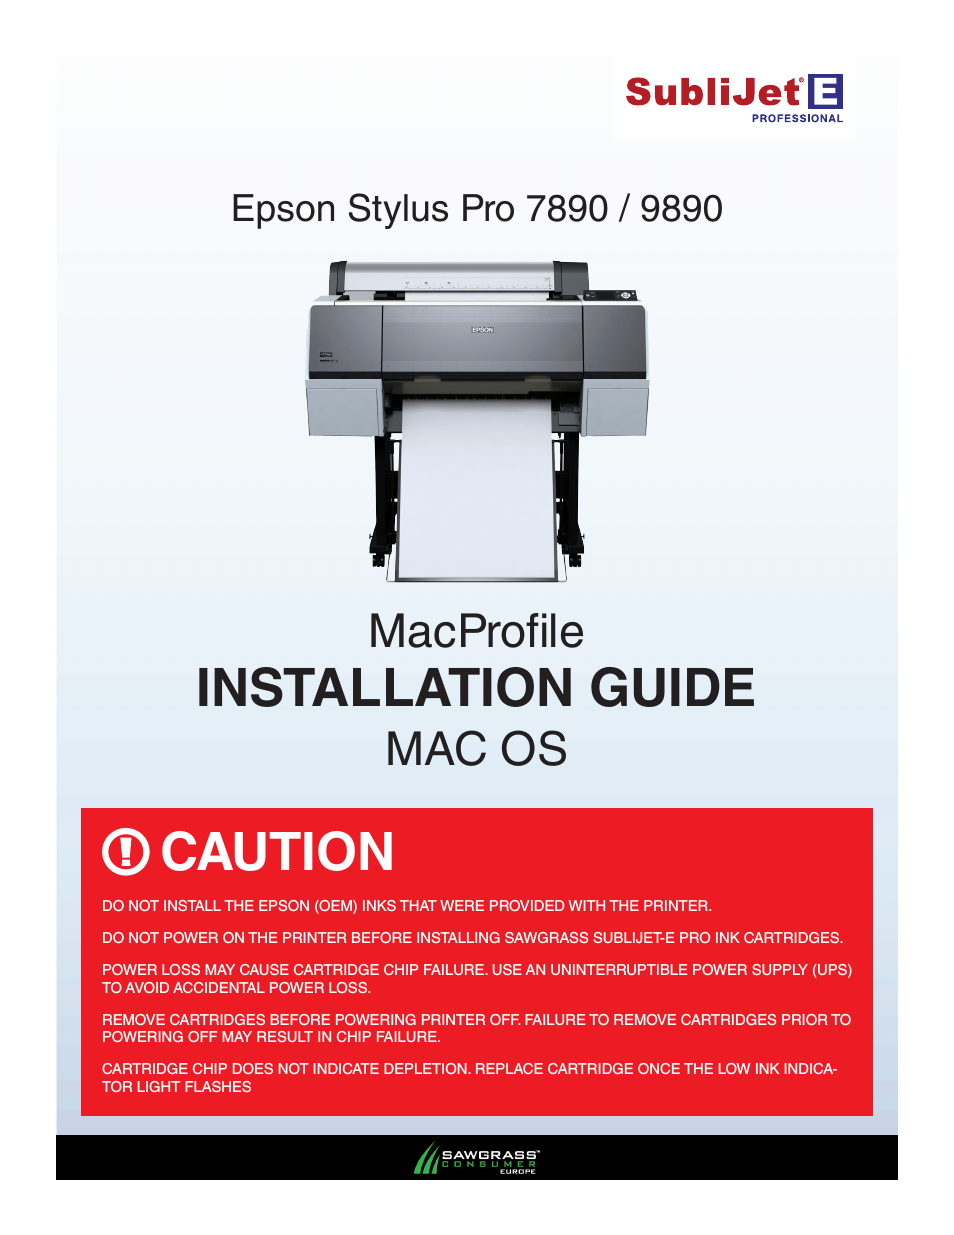 SubliJet E Epson Stylus Pro 7890 (Mac ICC Profile Setup): Printer/Profile Installation Guide